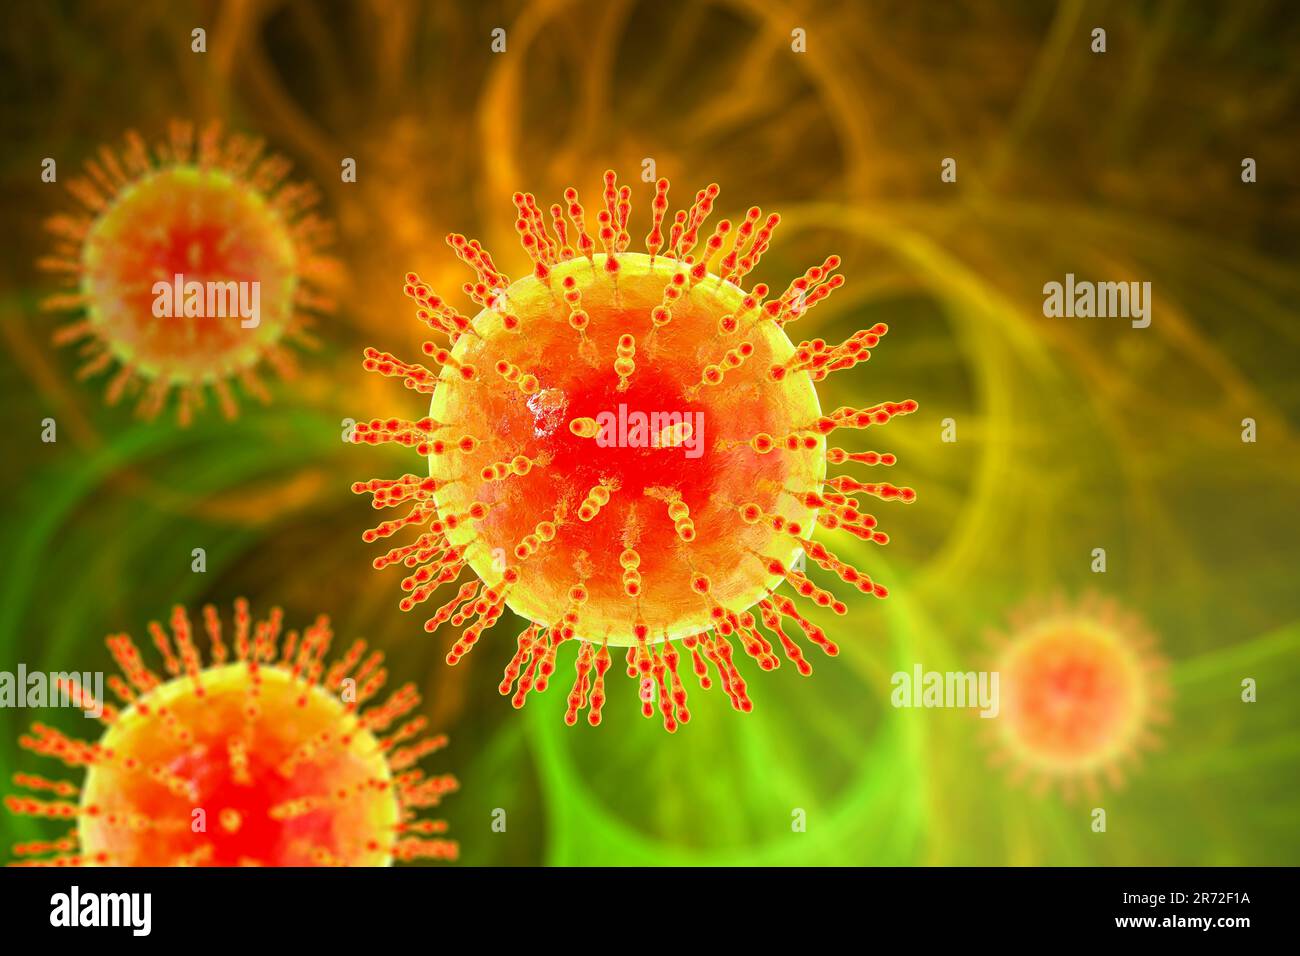 Group of viruses, computer illustration. Stock Photo